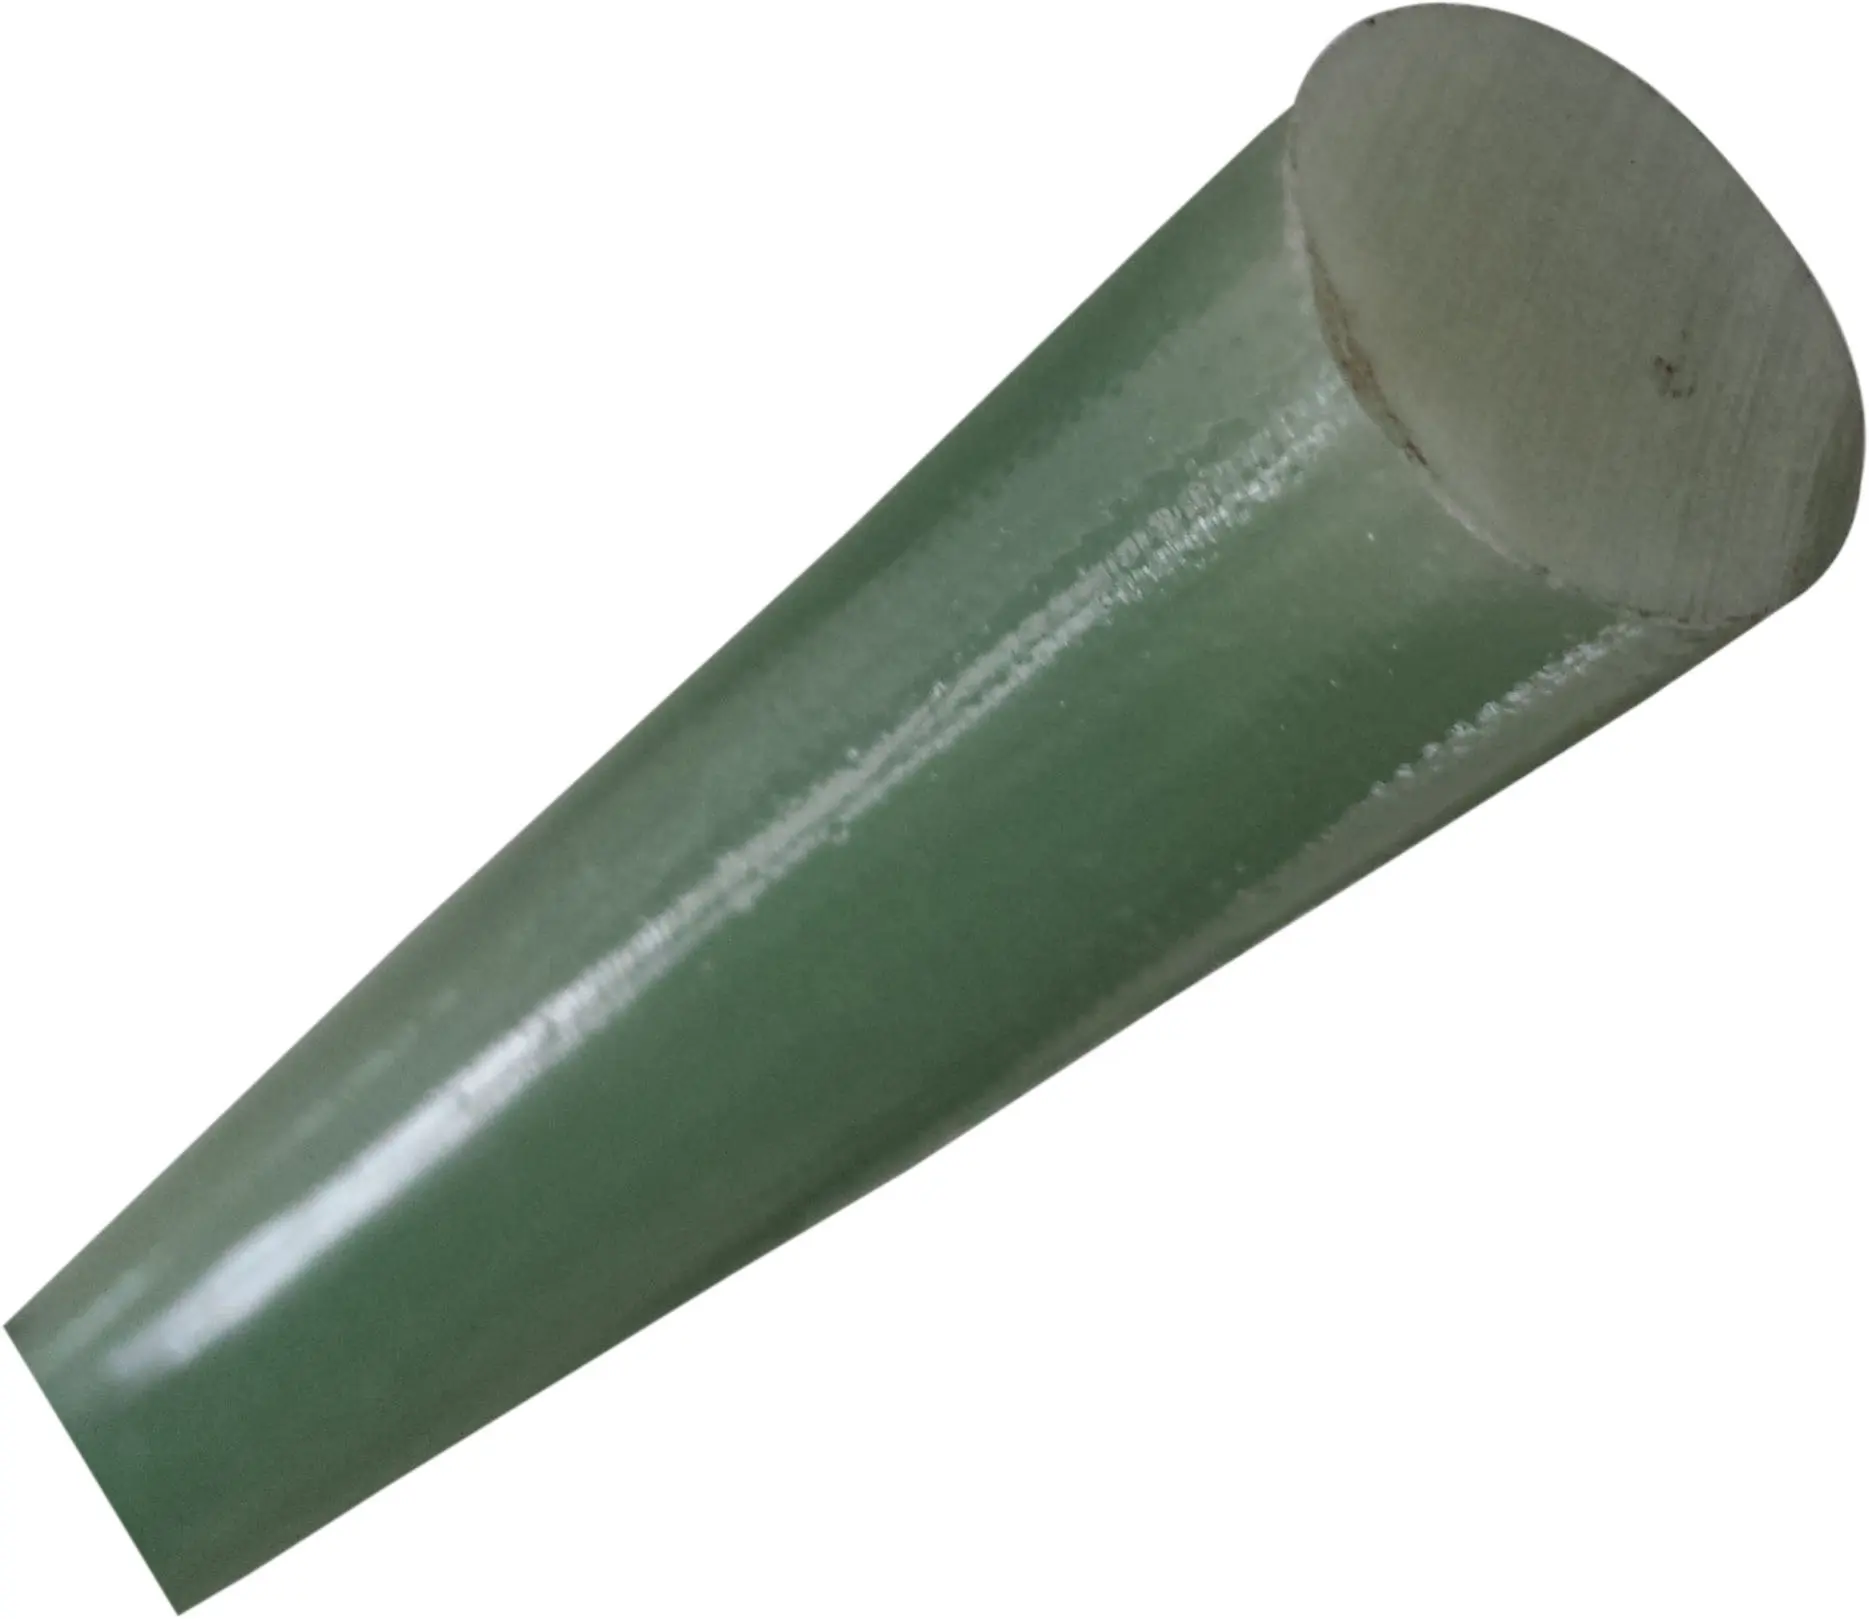 Epoxy glass rod 3821 green epoxy fiber rod yellow FRP G10 rod